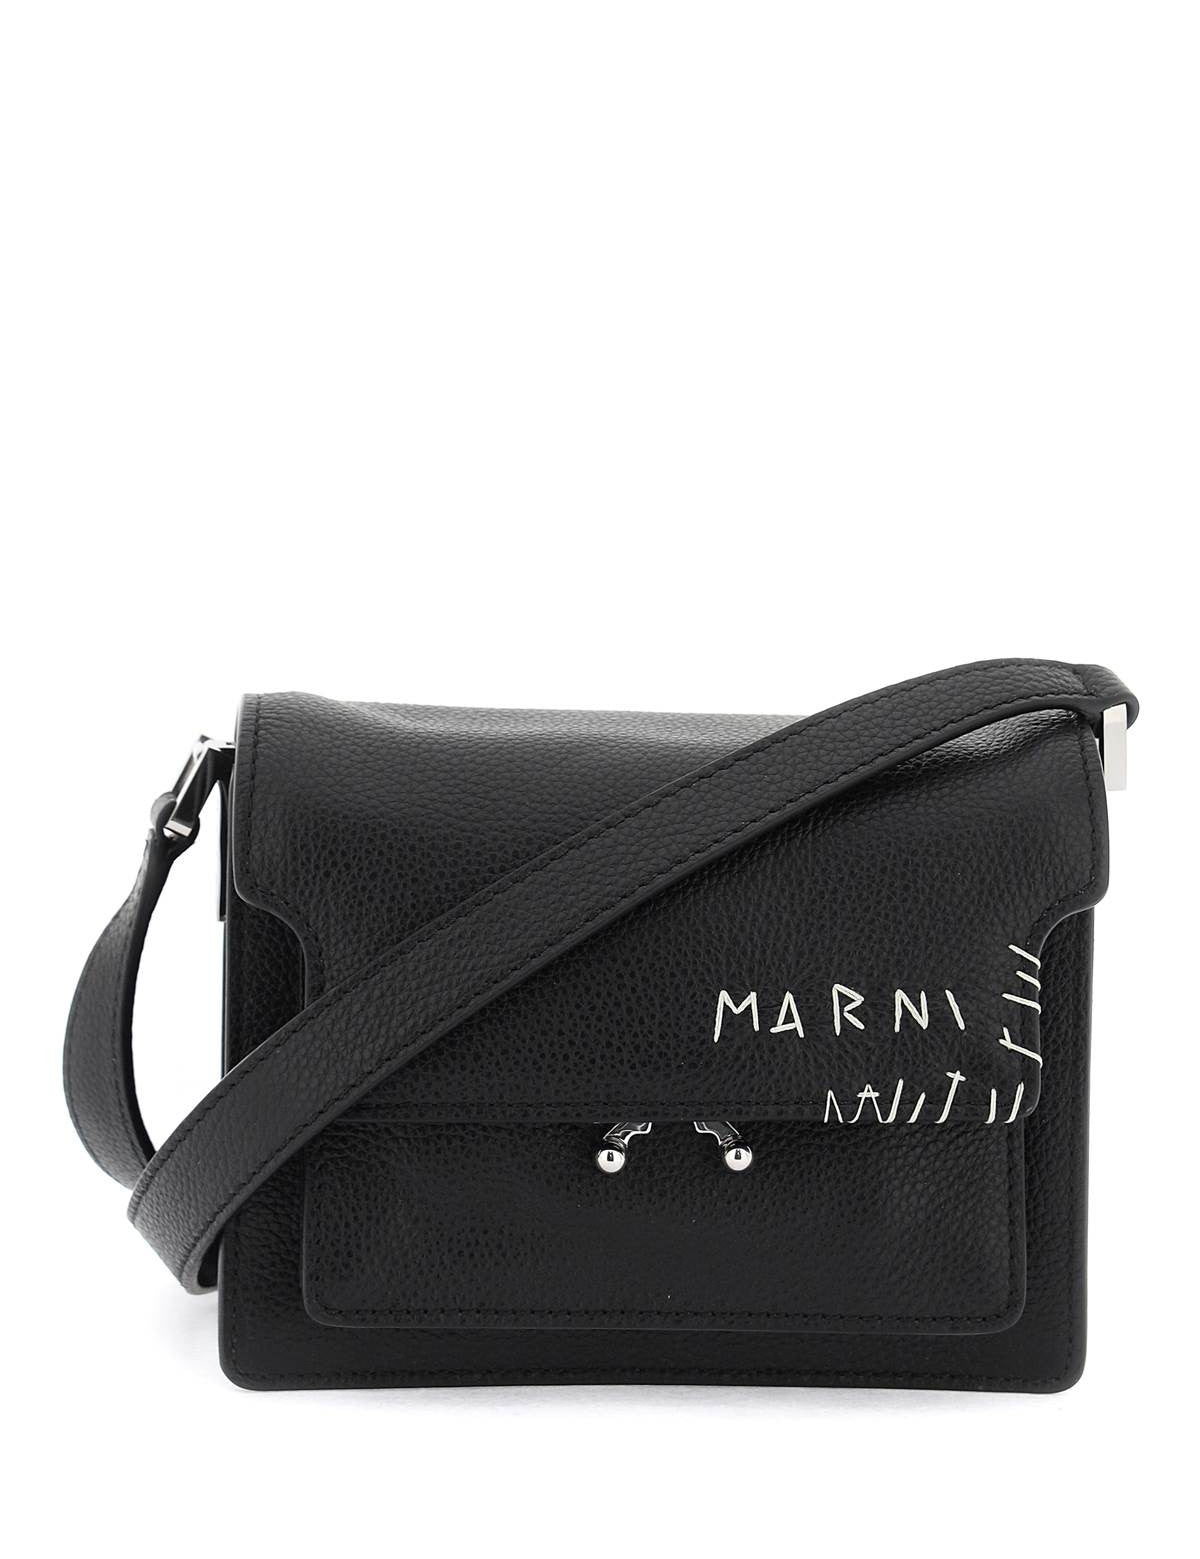 marni-mini-soft-trunk-shoulder-bag_21453e62-feba-4cae-beaa-7da0600c8f2a.jpg